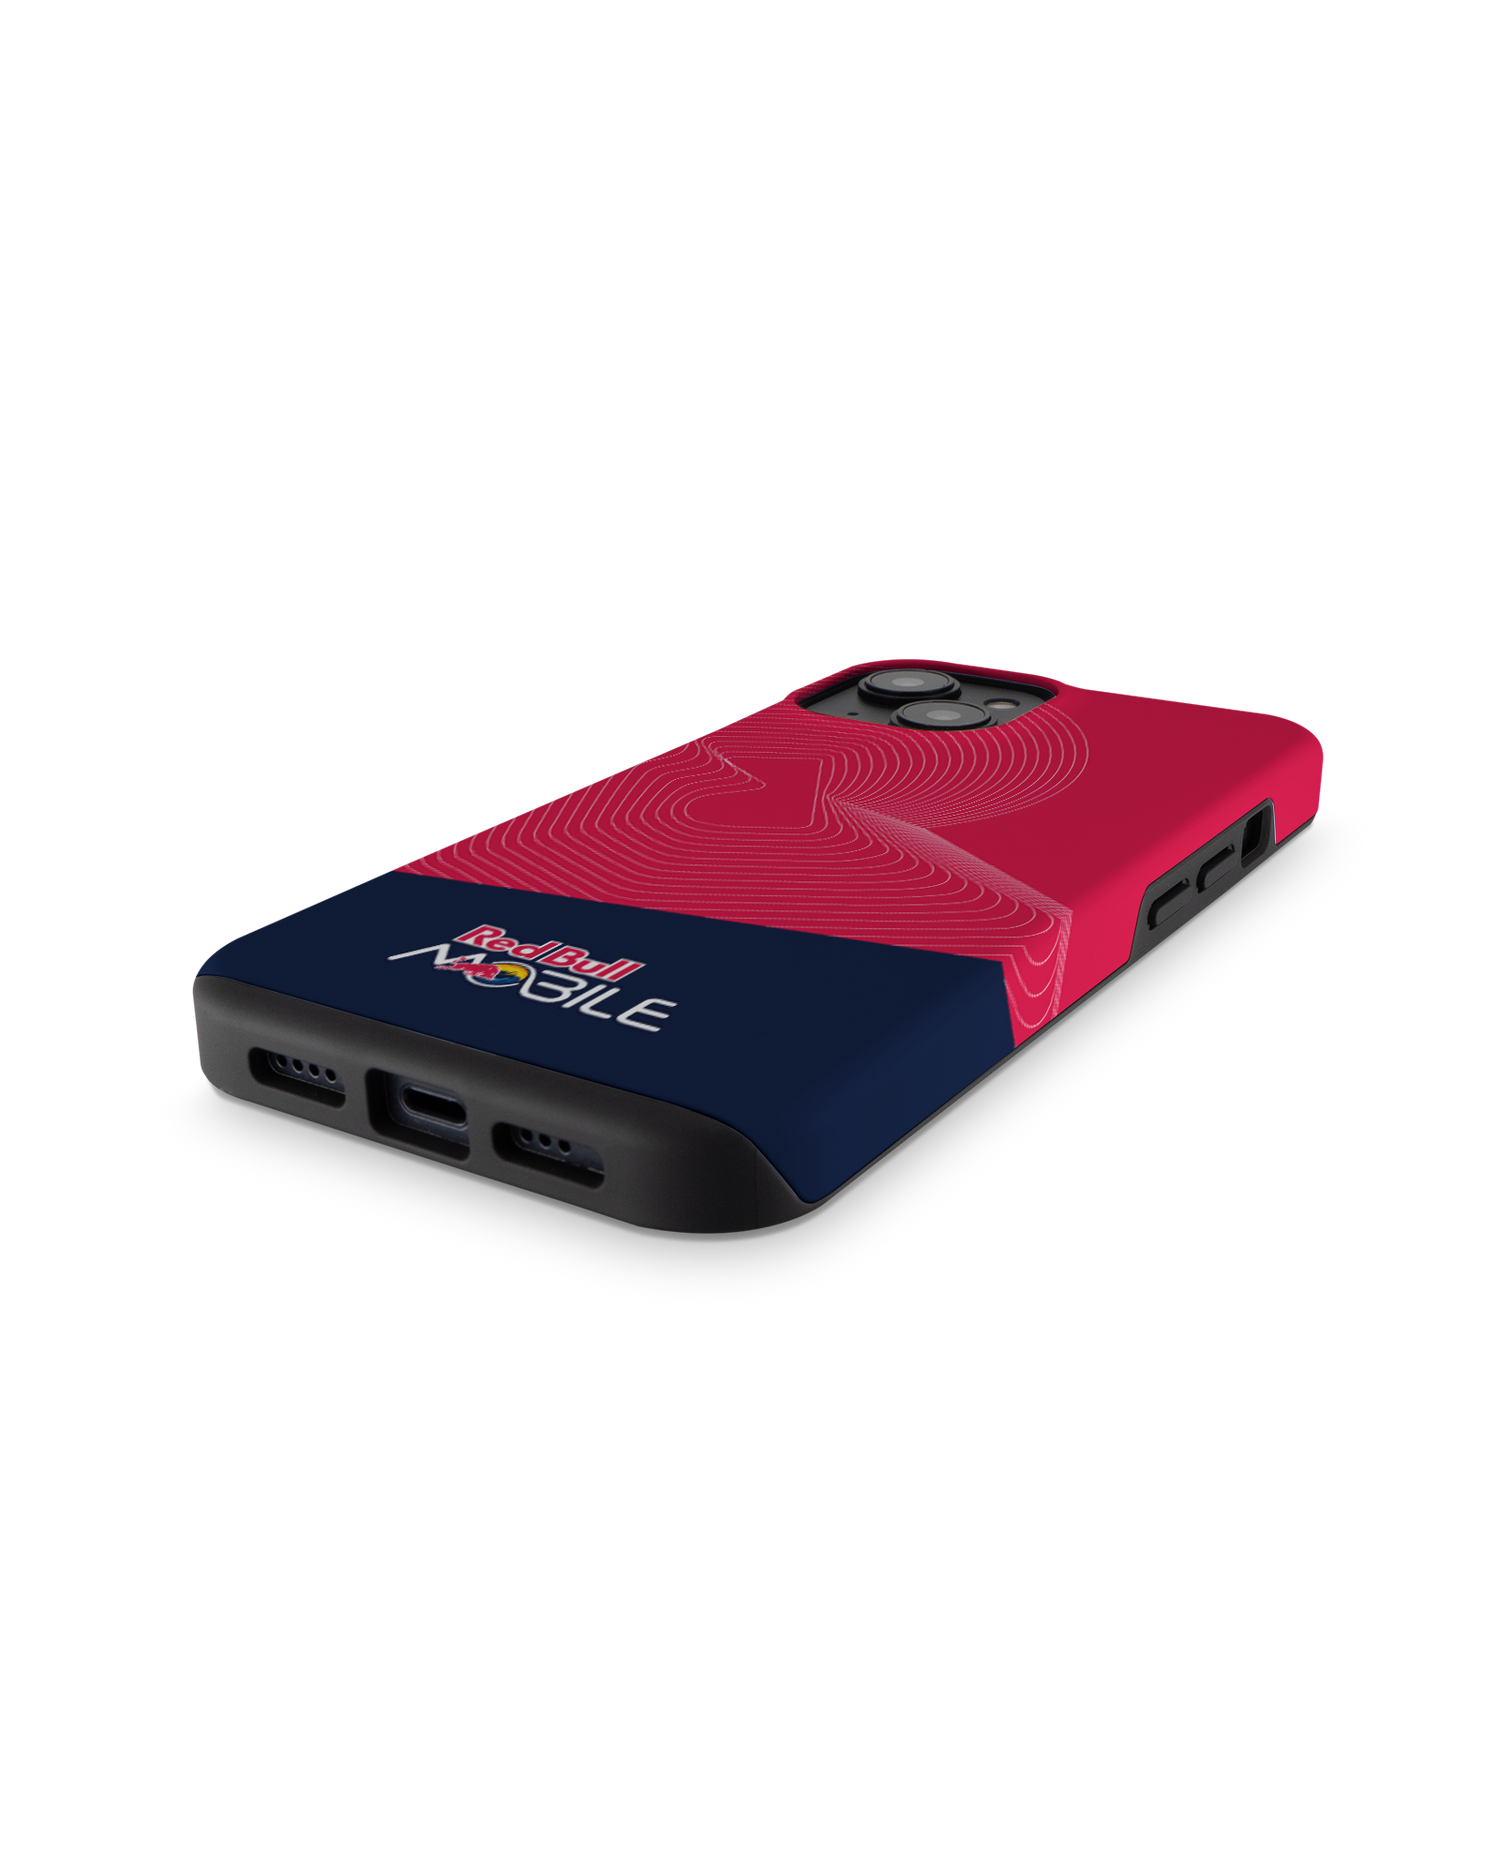 Red Bull MOBILE Red Premium Phone Case Apple iPhone 14